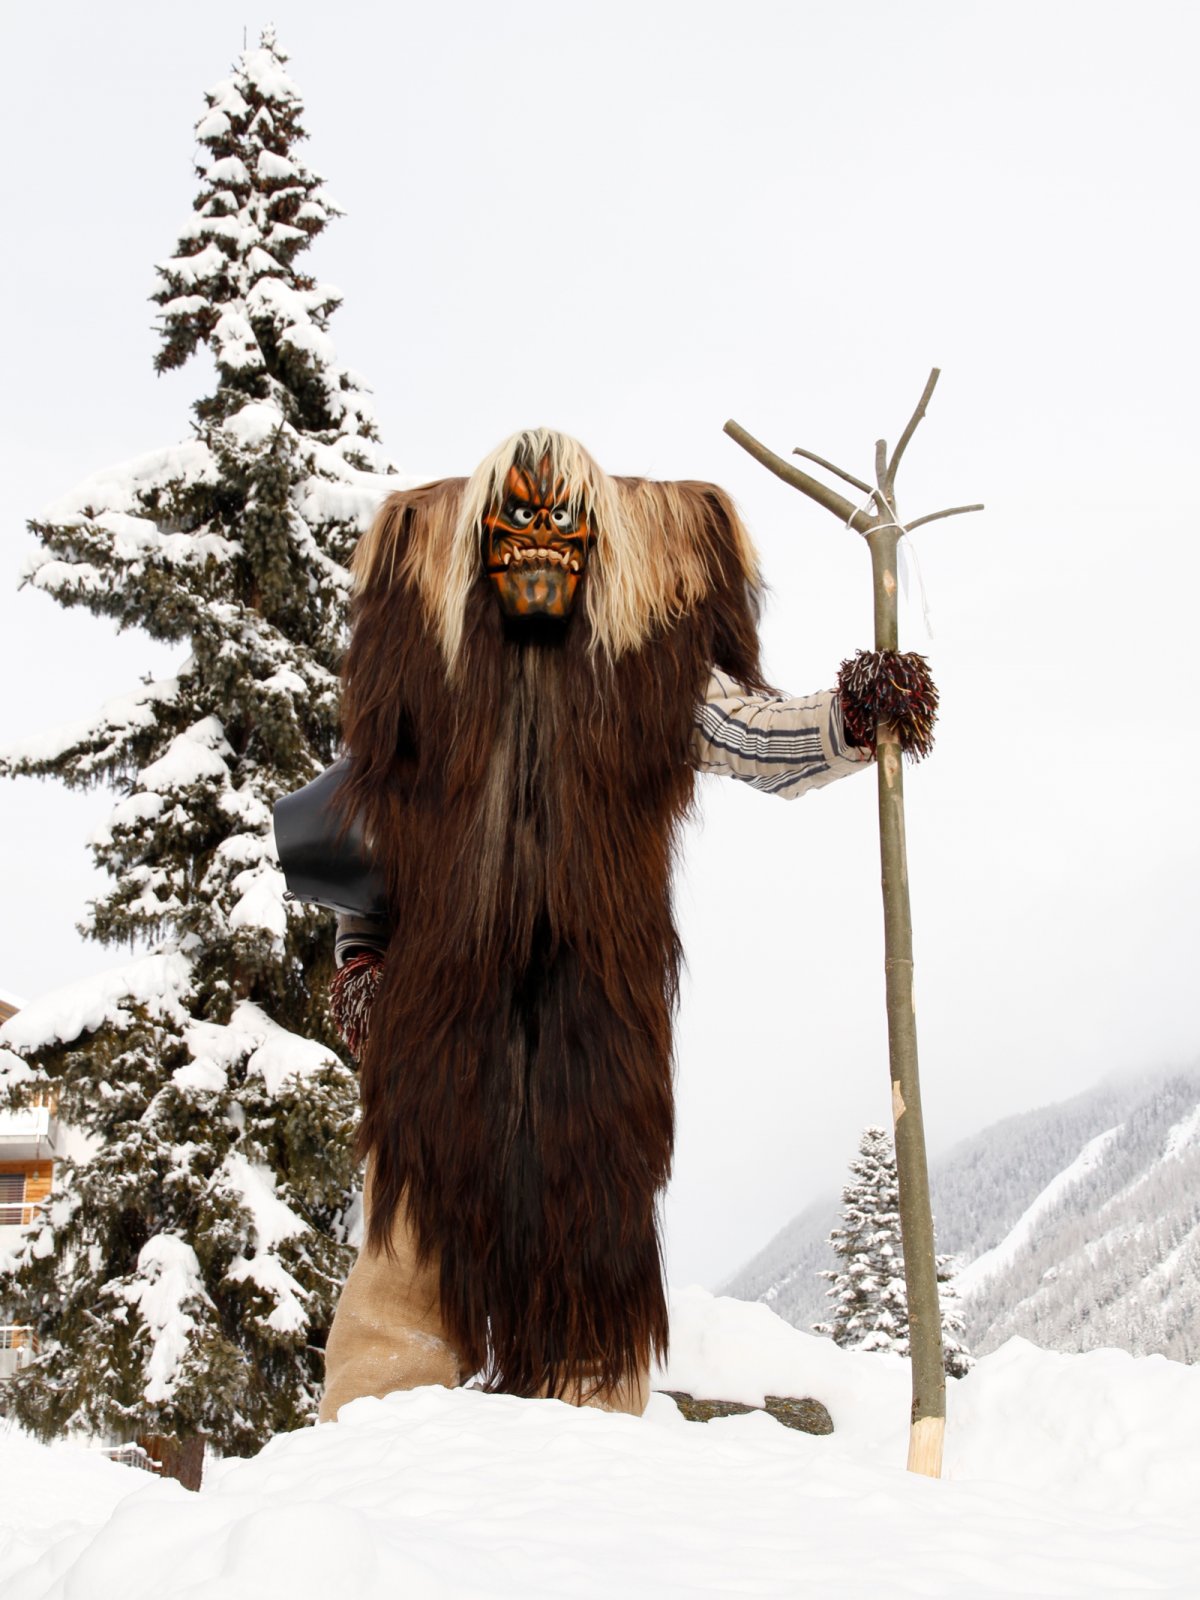 Tschäggättä Swiss Winter Tradition (Copyright Andy Storchenegger)